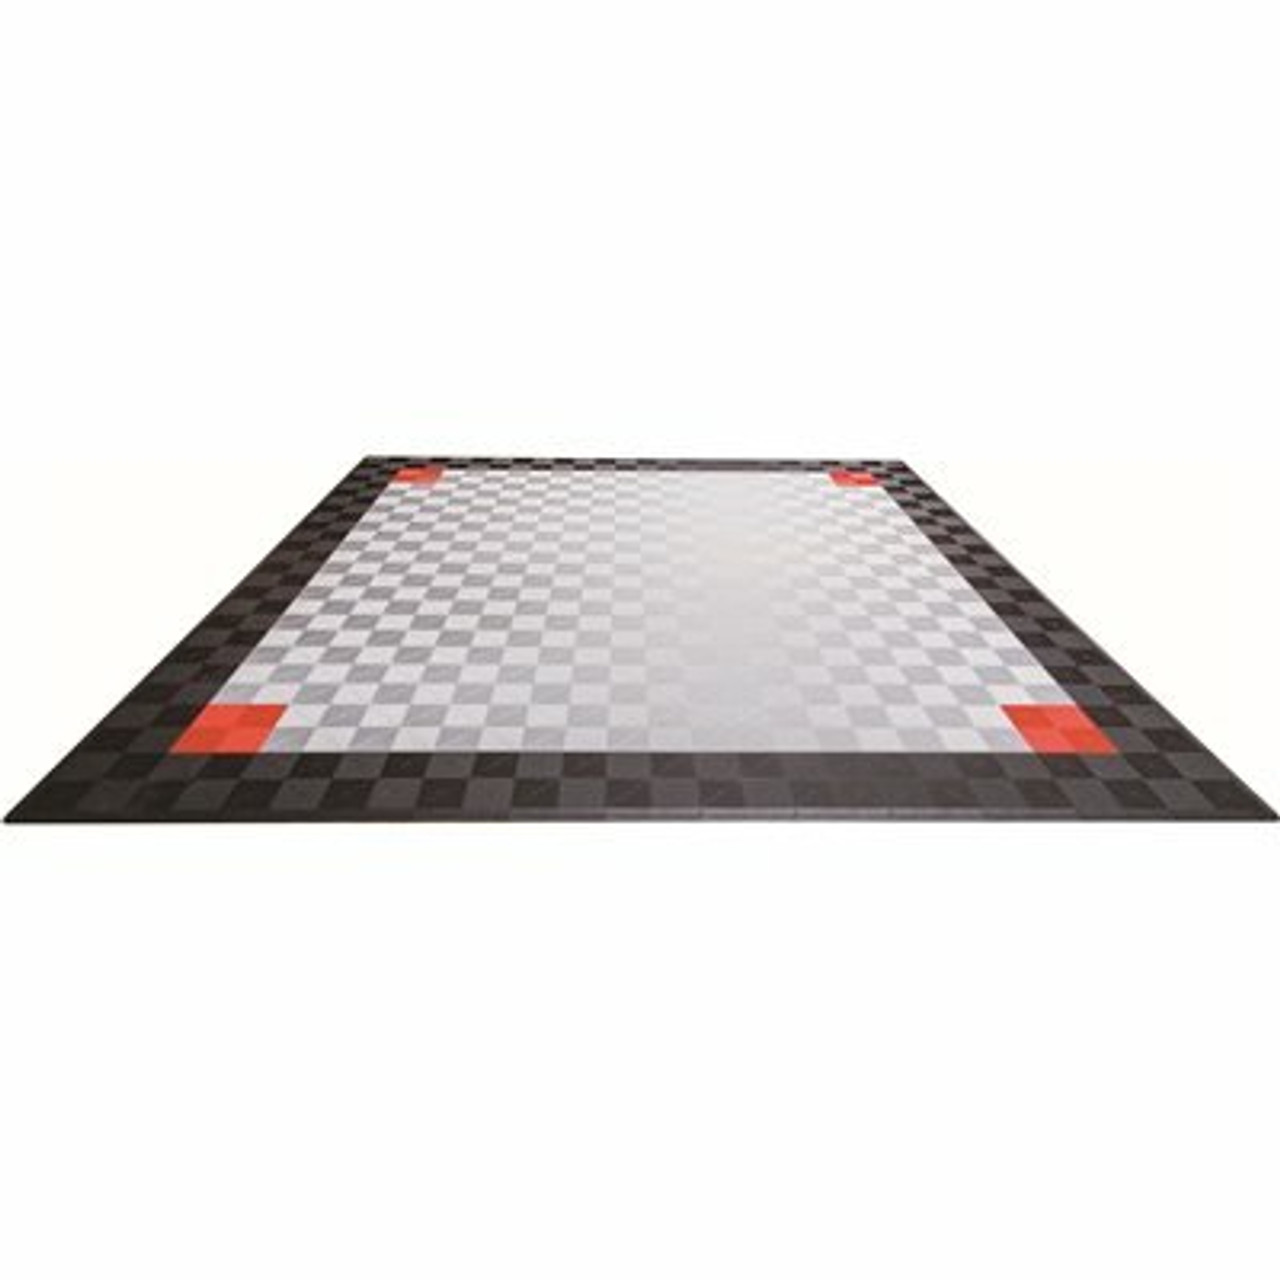 Swisstrax Black And Silver Double Car Pad Ribtrax Modular Tile Flooring (268 Sq. Ft./Case)